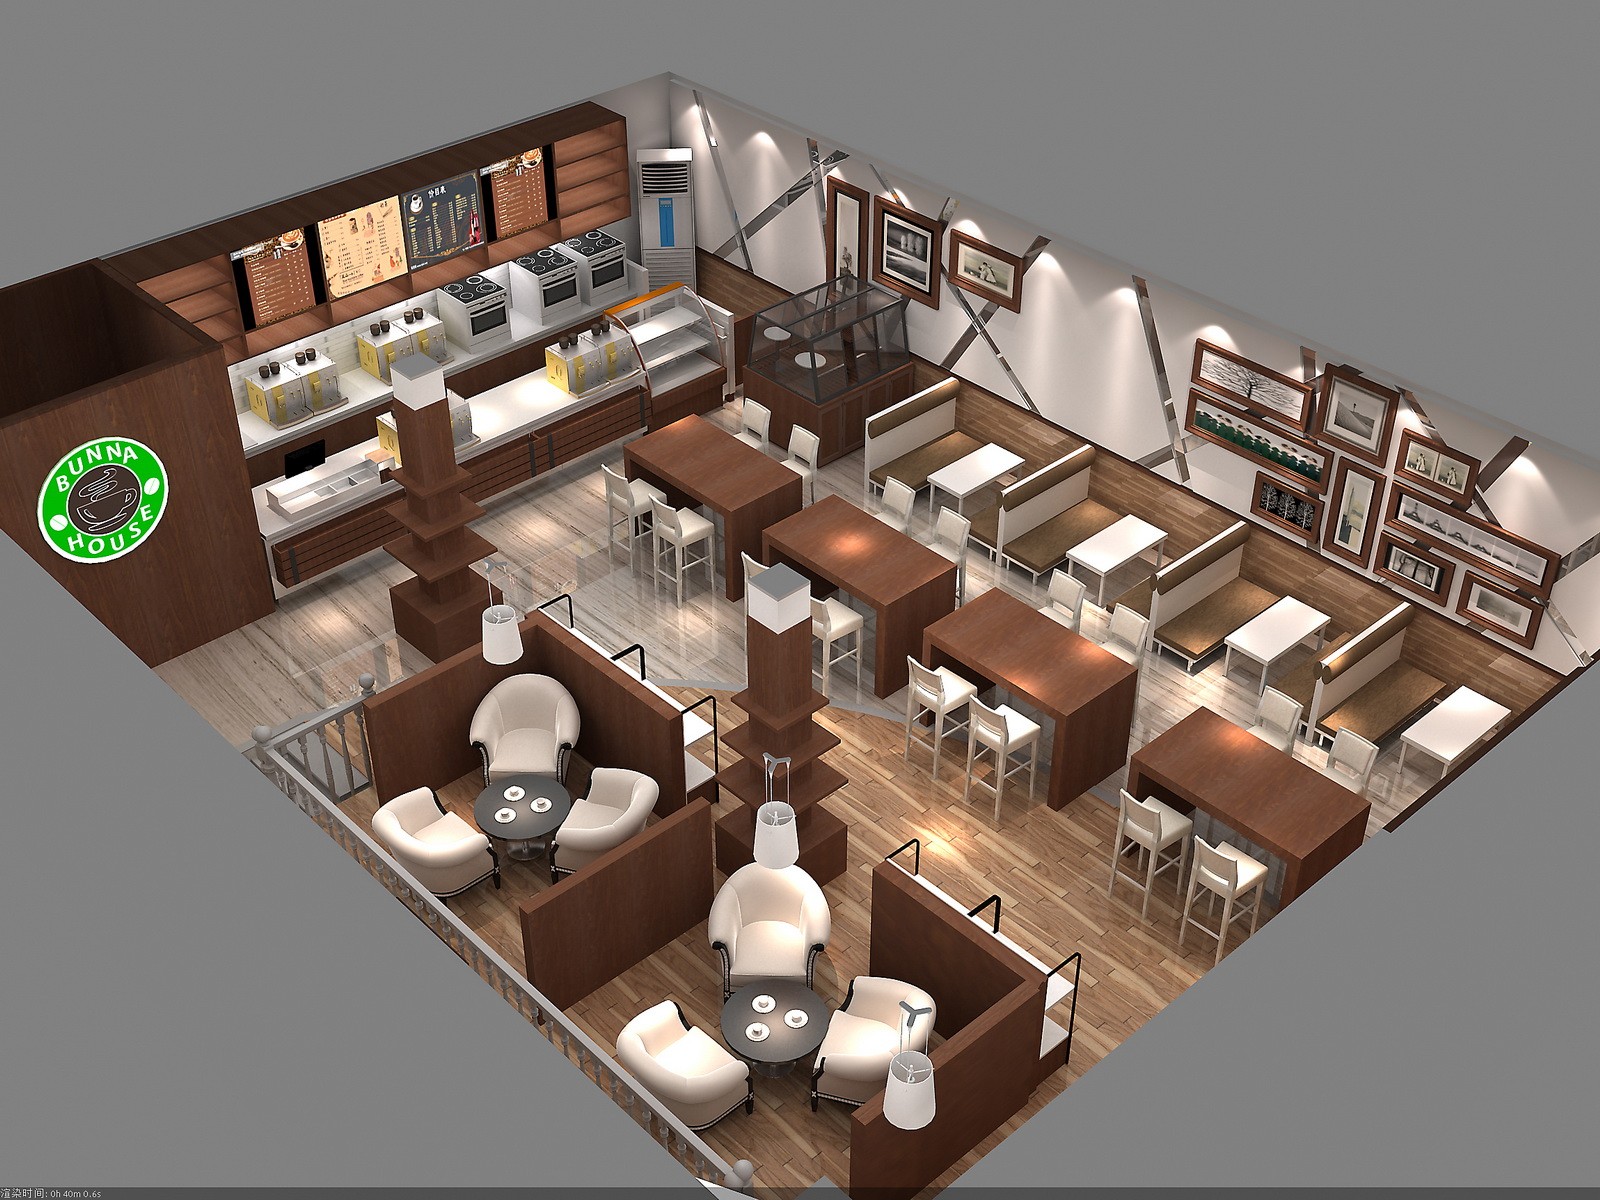 Coffee Shop Floor Plan With Dimensions - Coffee Shop Coffee Shop